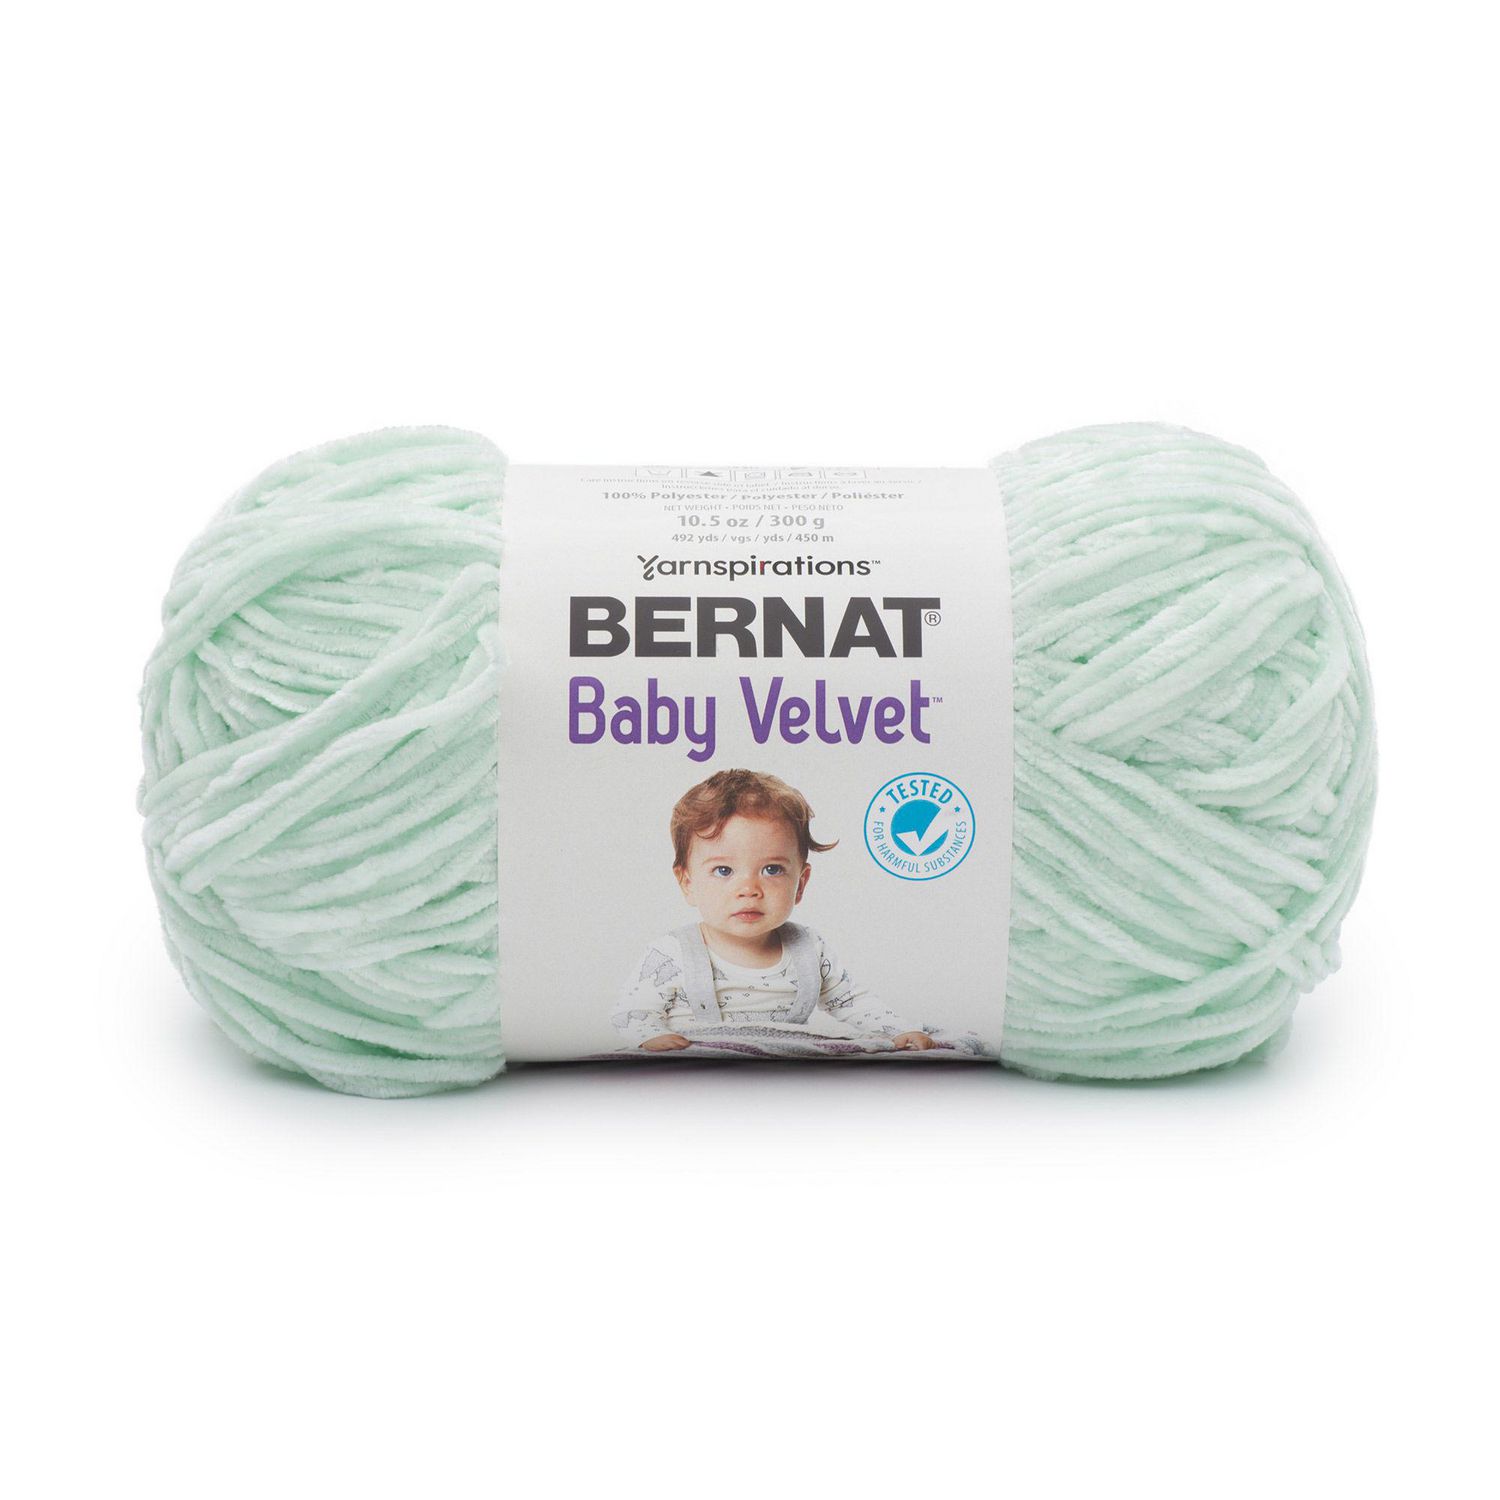 Bernat Baby Velvet Yarn (300 g, 10.5 oz), Seafoam | Walmart Canada